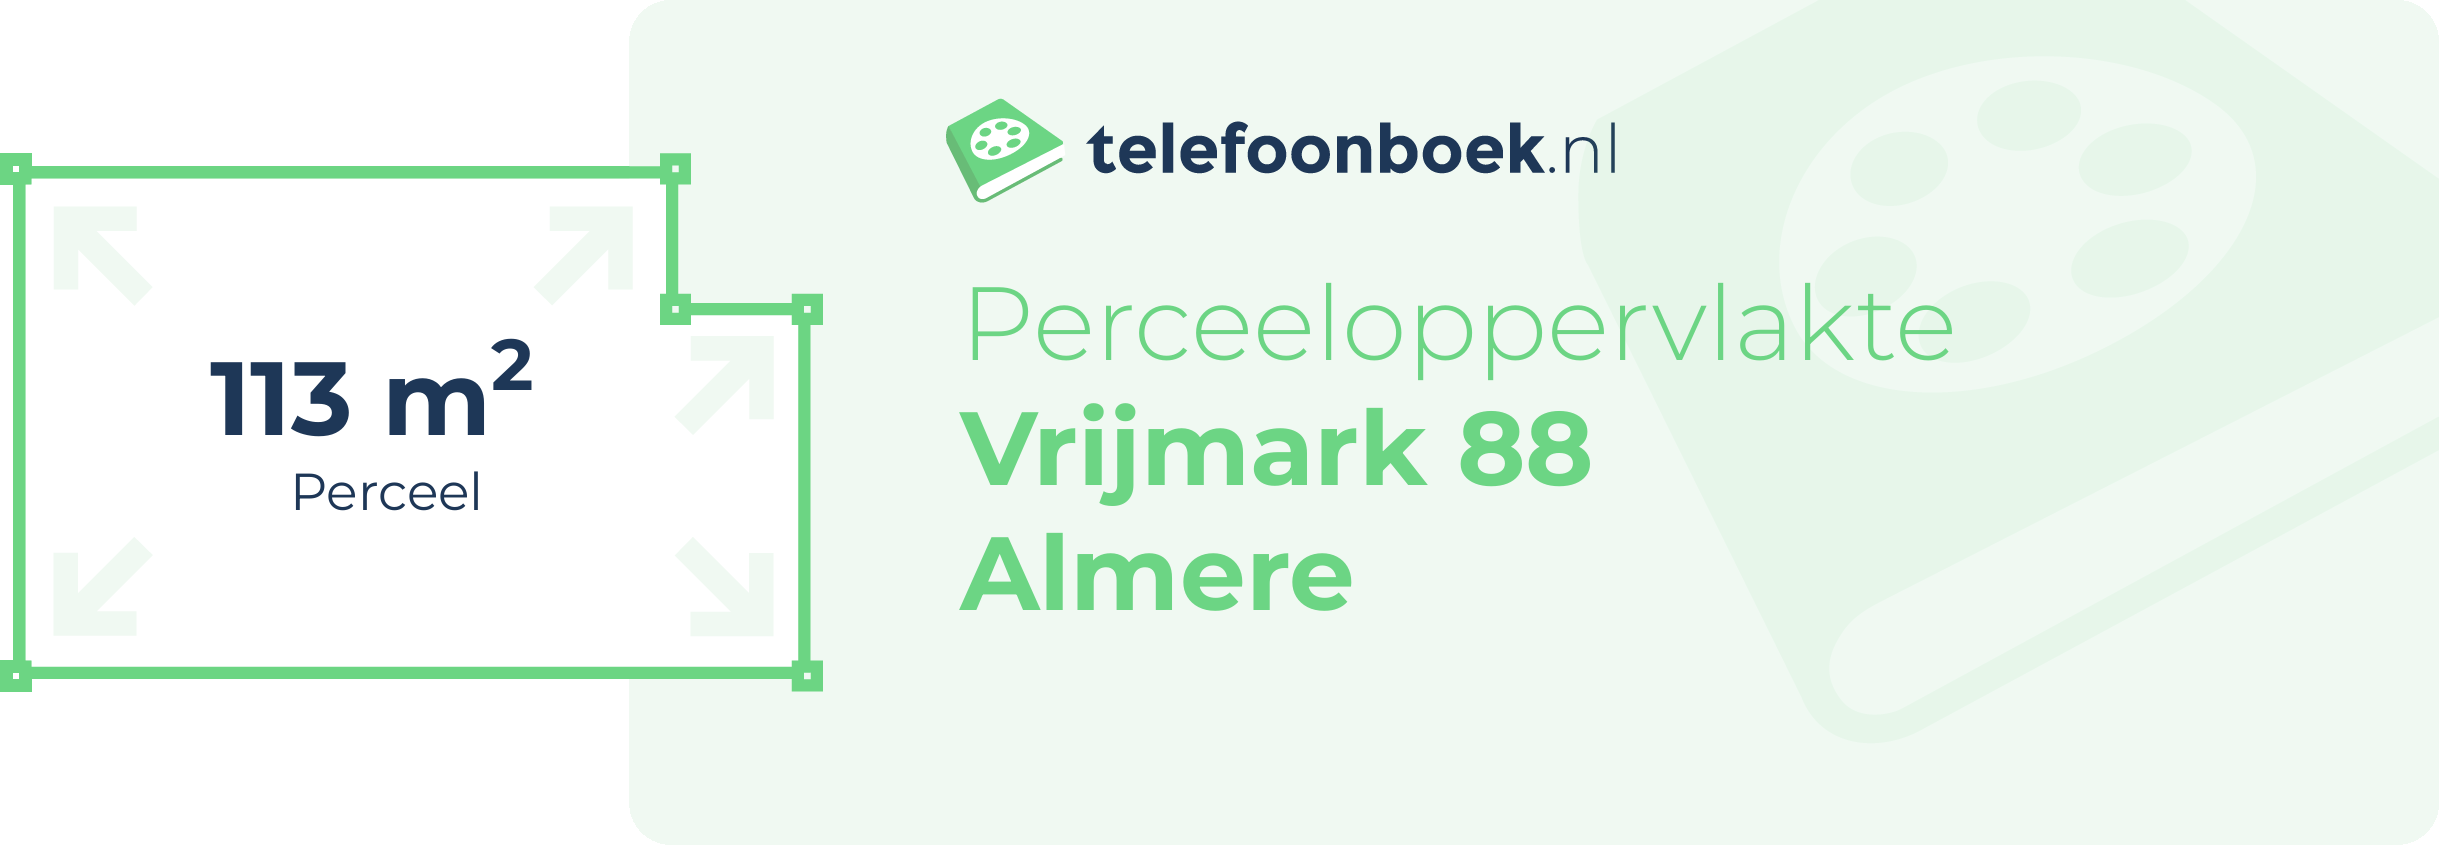 Perceeloppervlakte Vrijmark 88 Almere